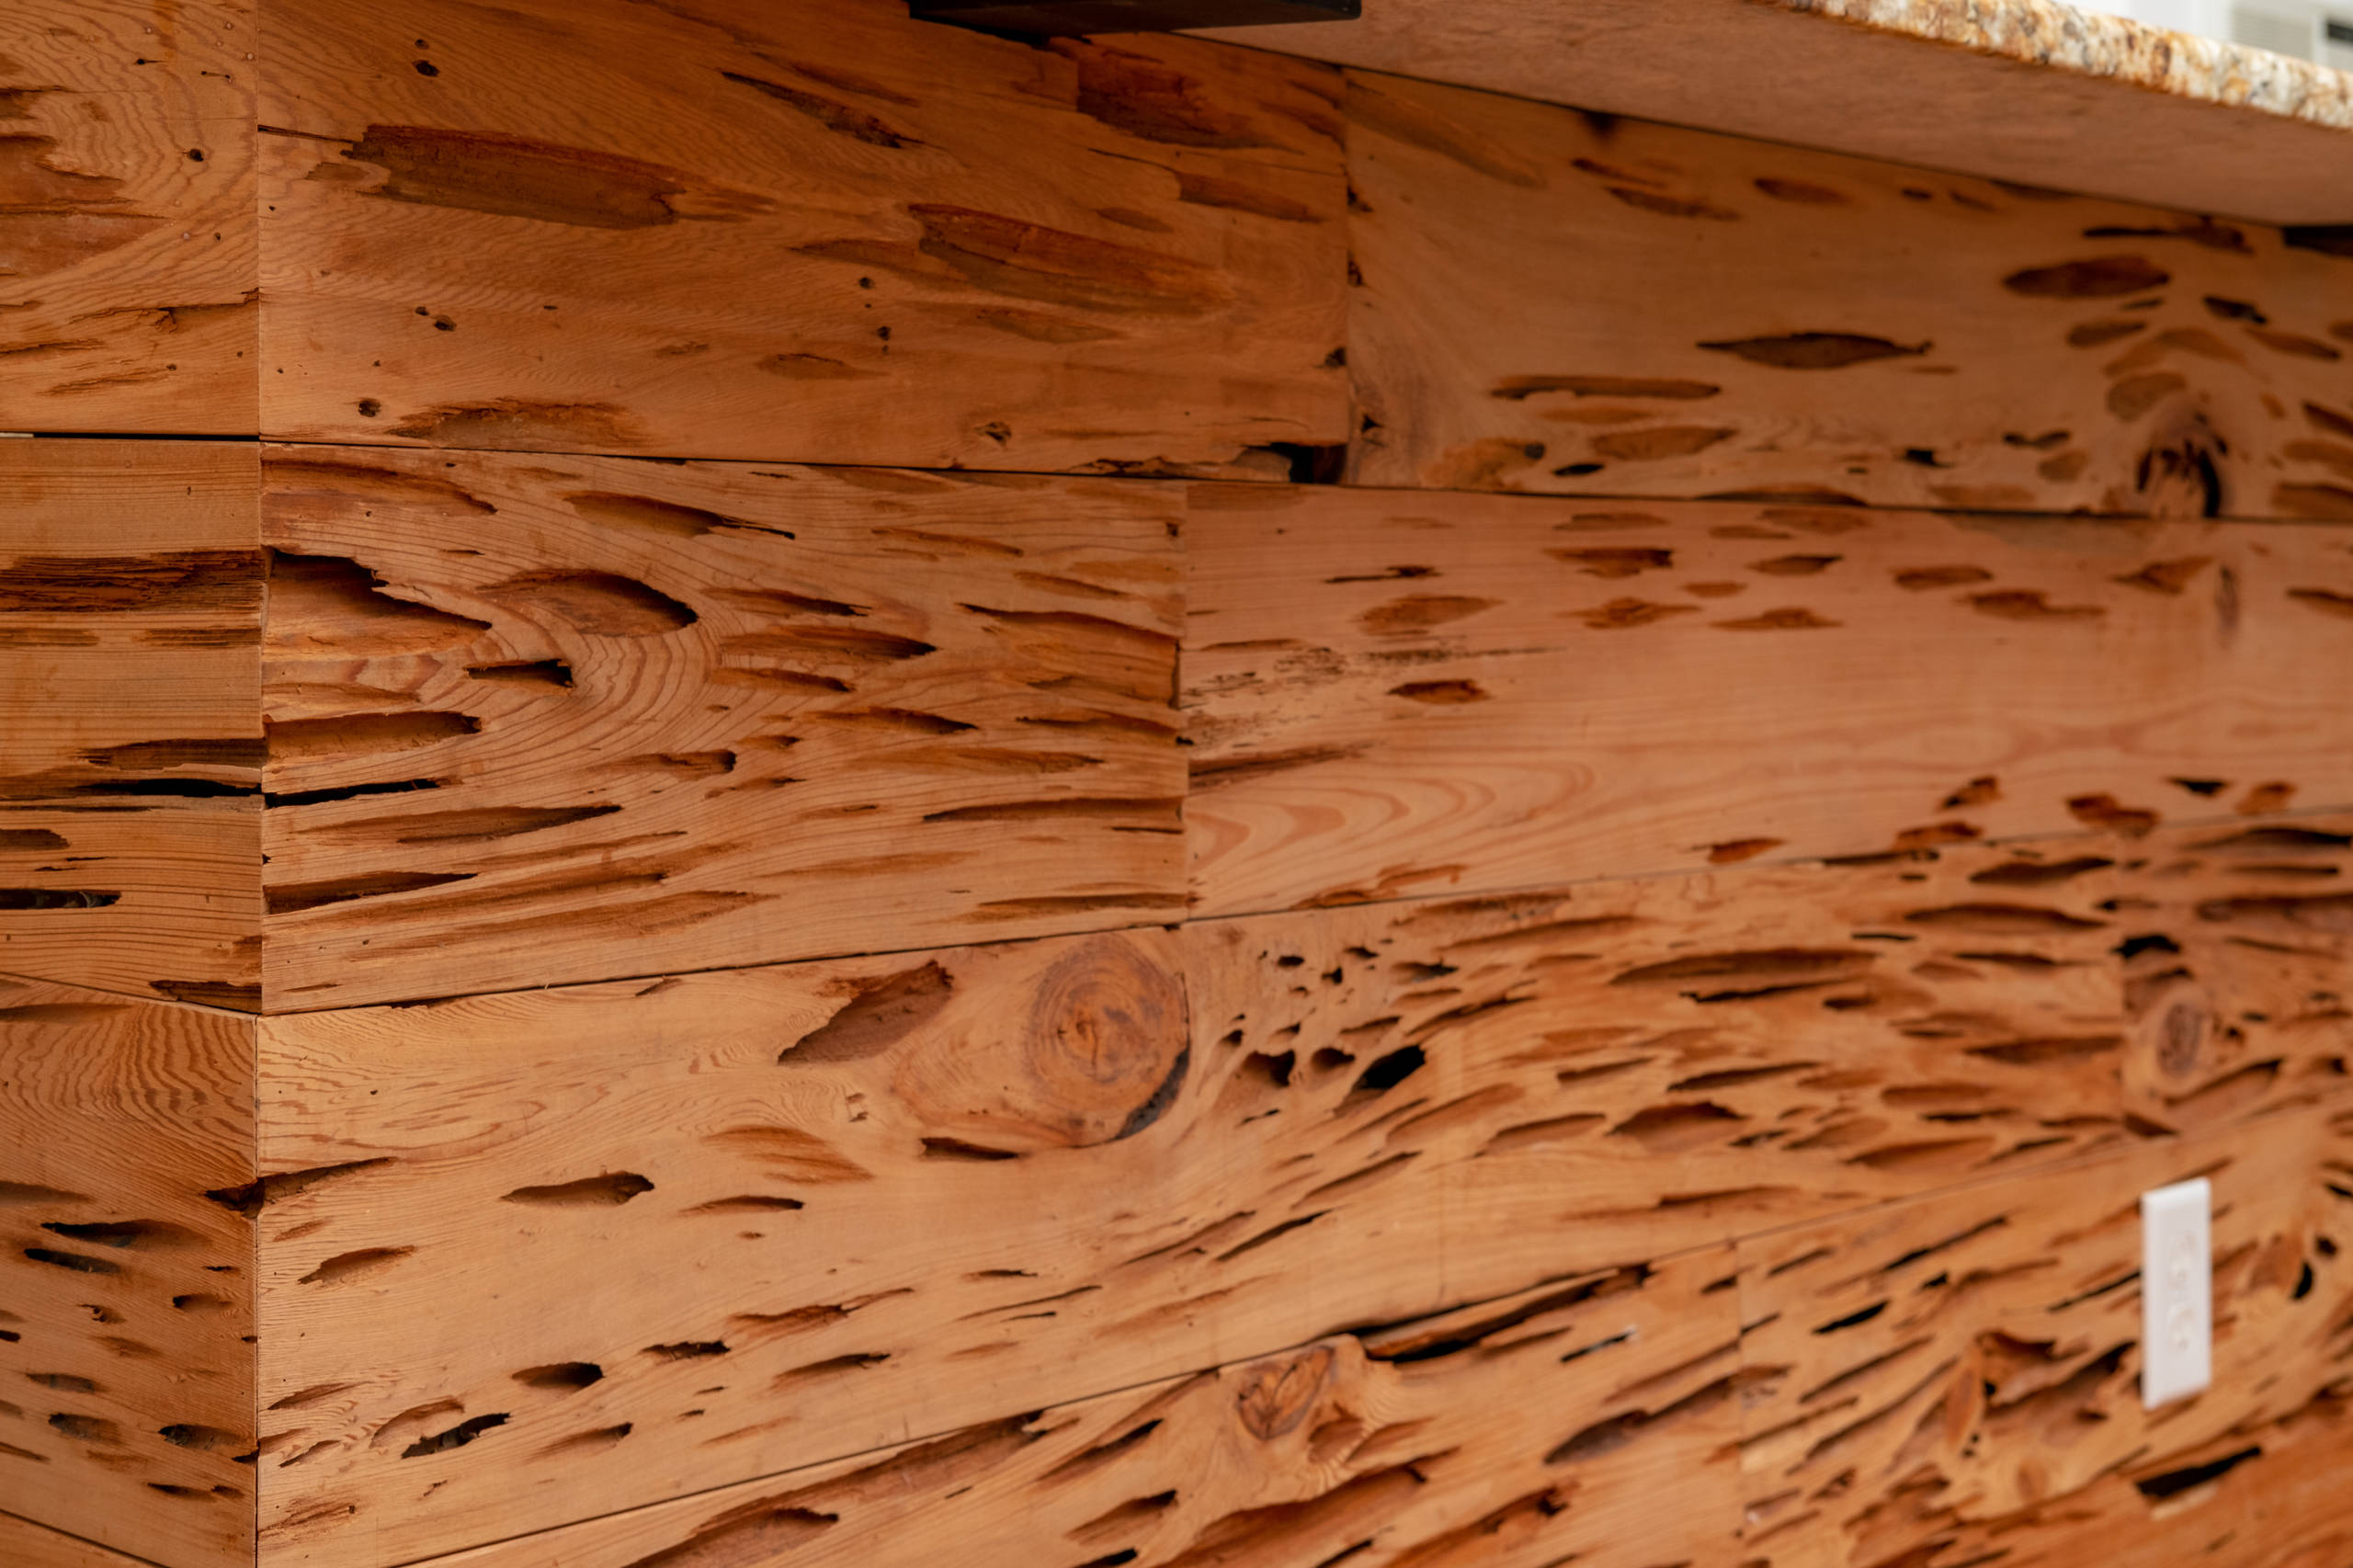 Siesta Key Woodworking + Deck